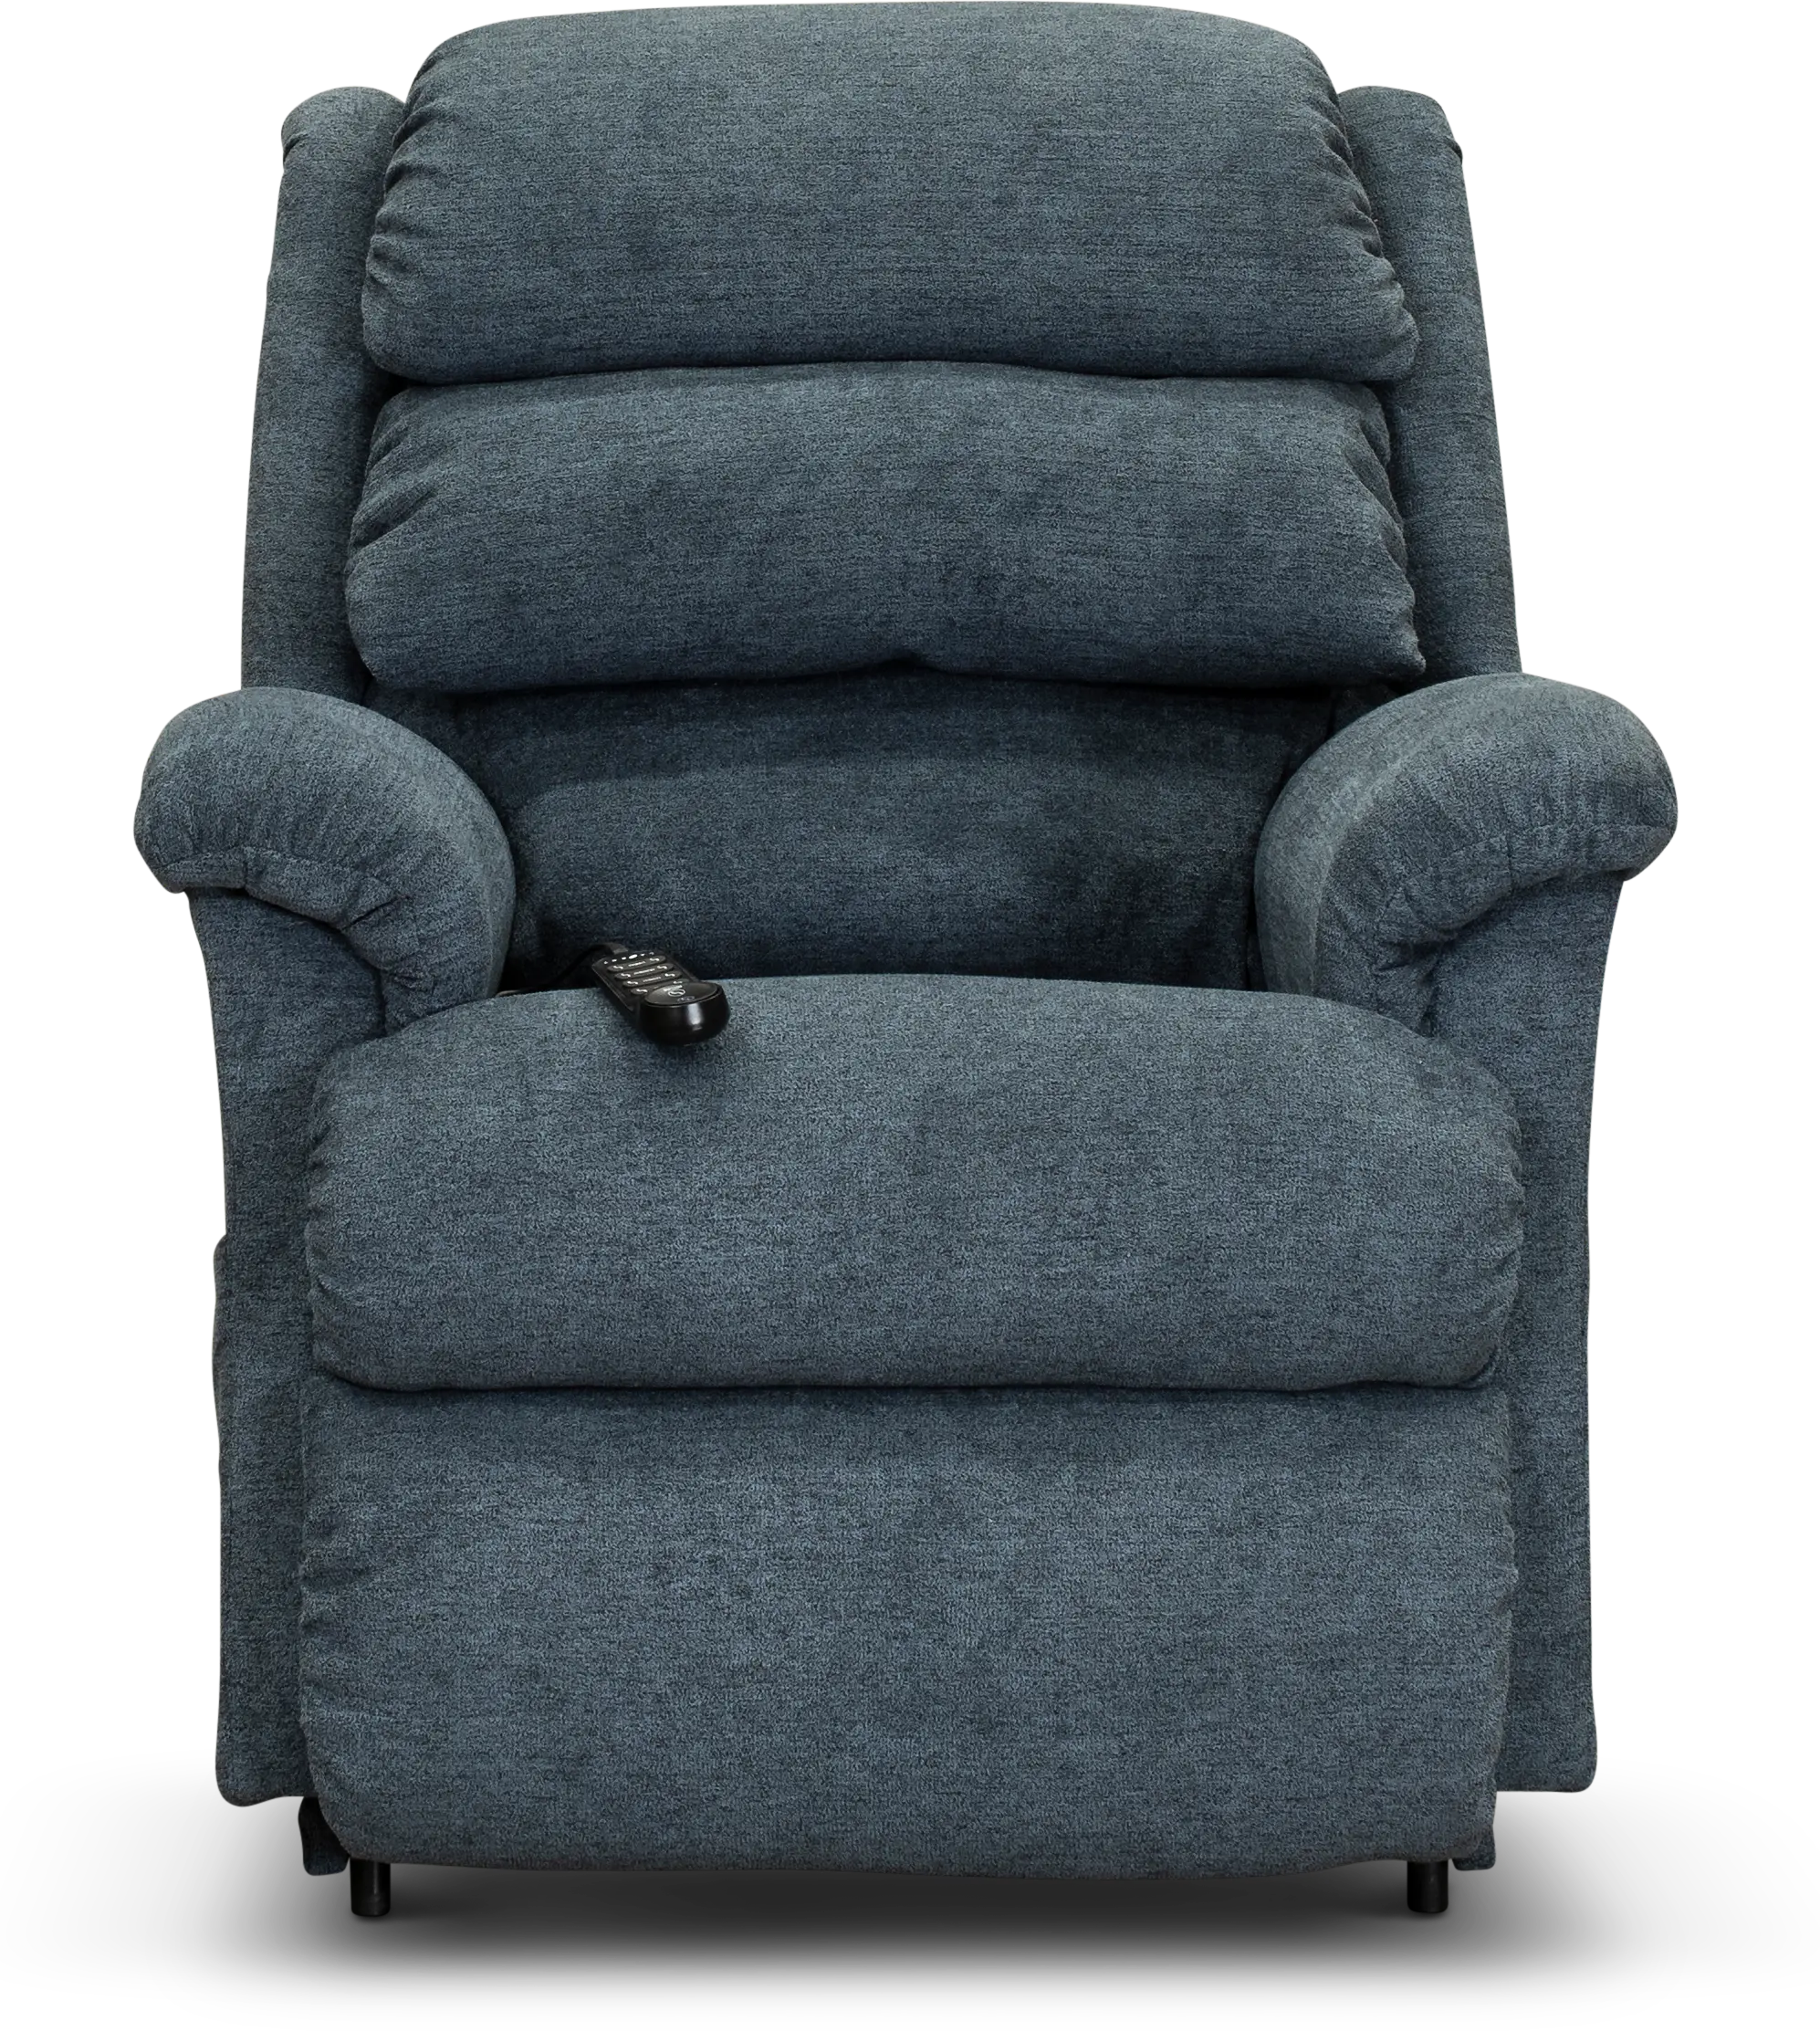 Denim Blue Luxury Reclining Lift Chair - Astor